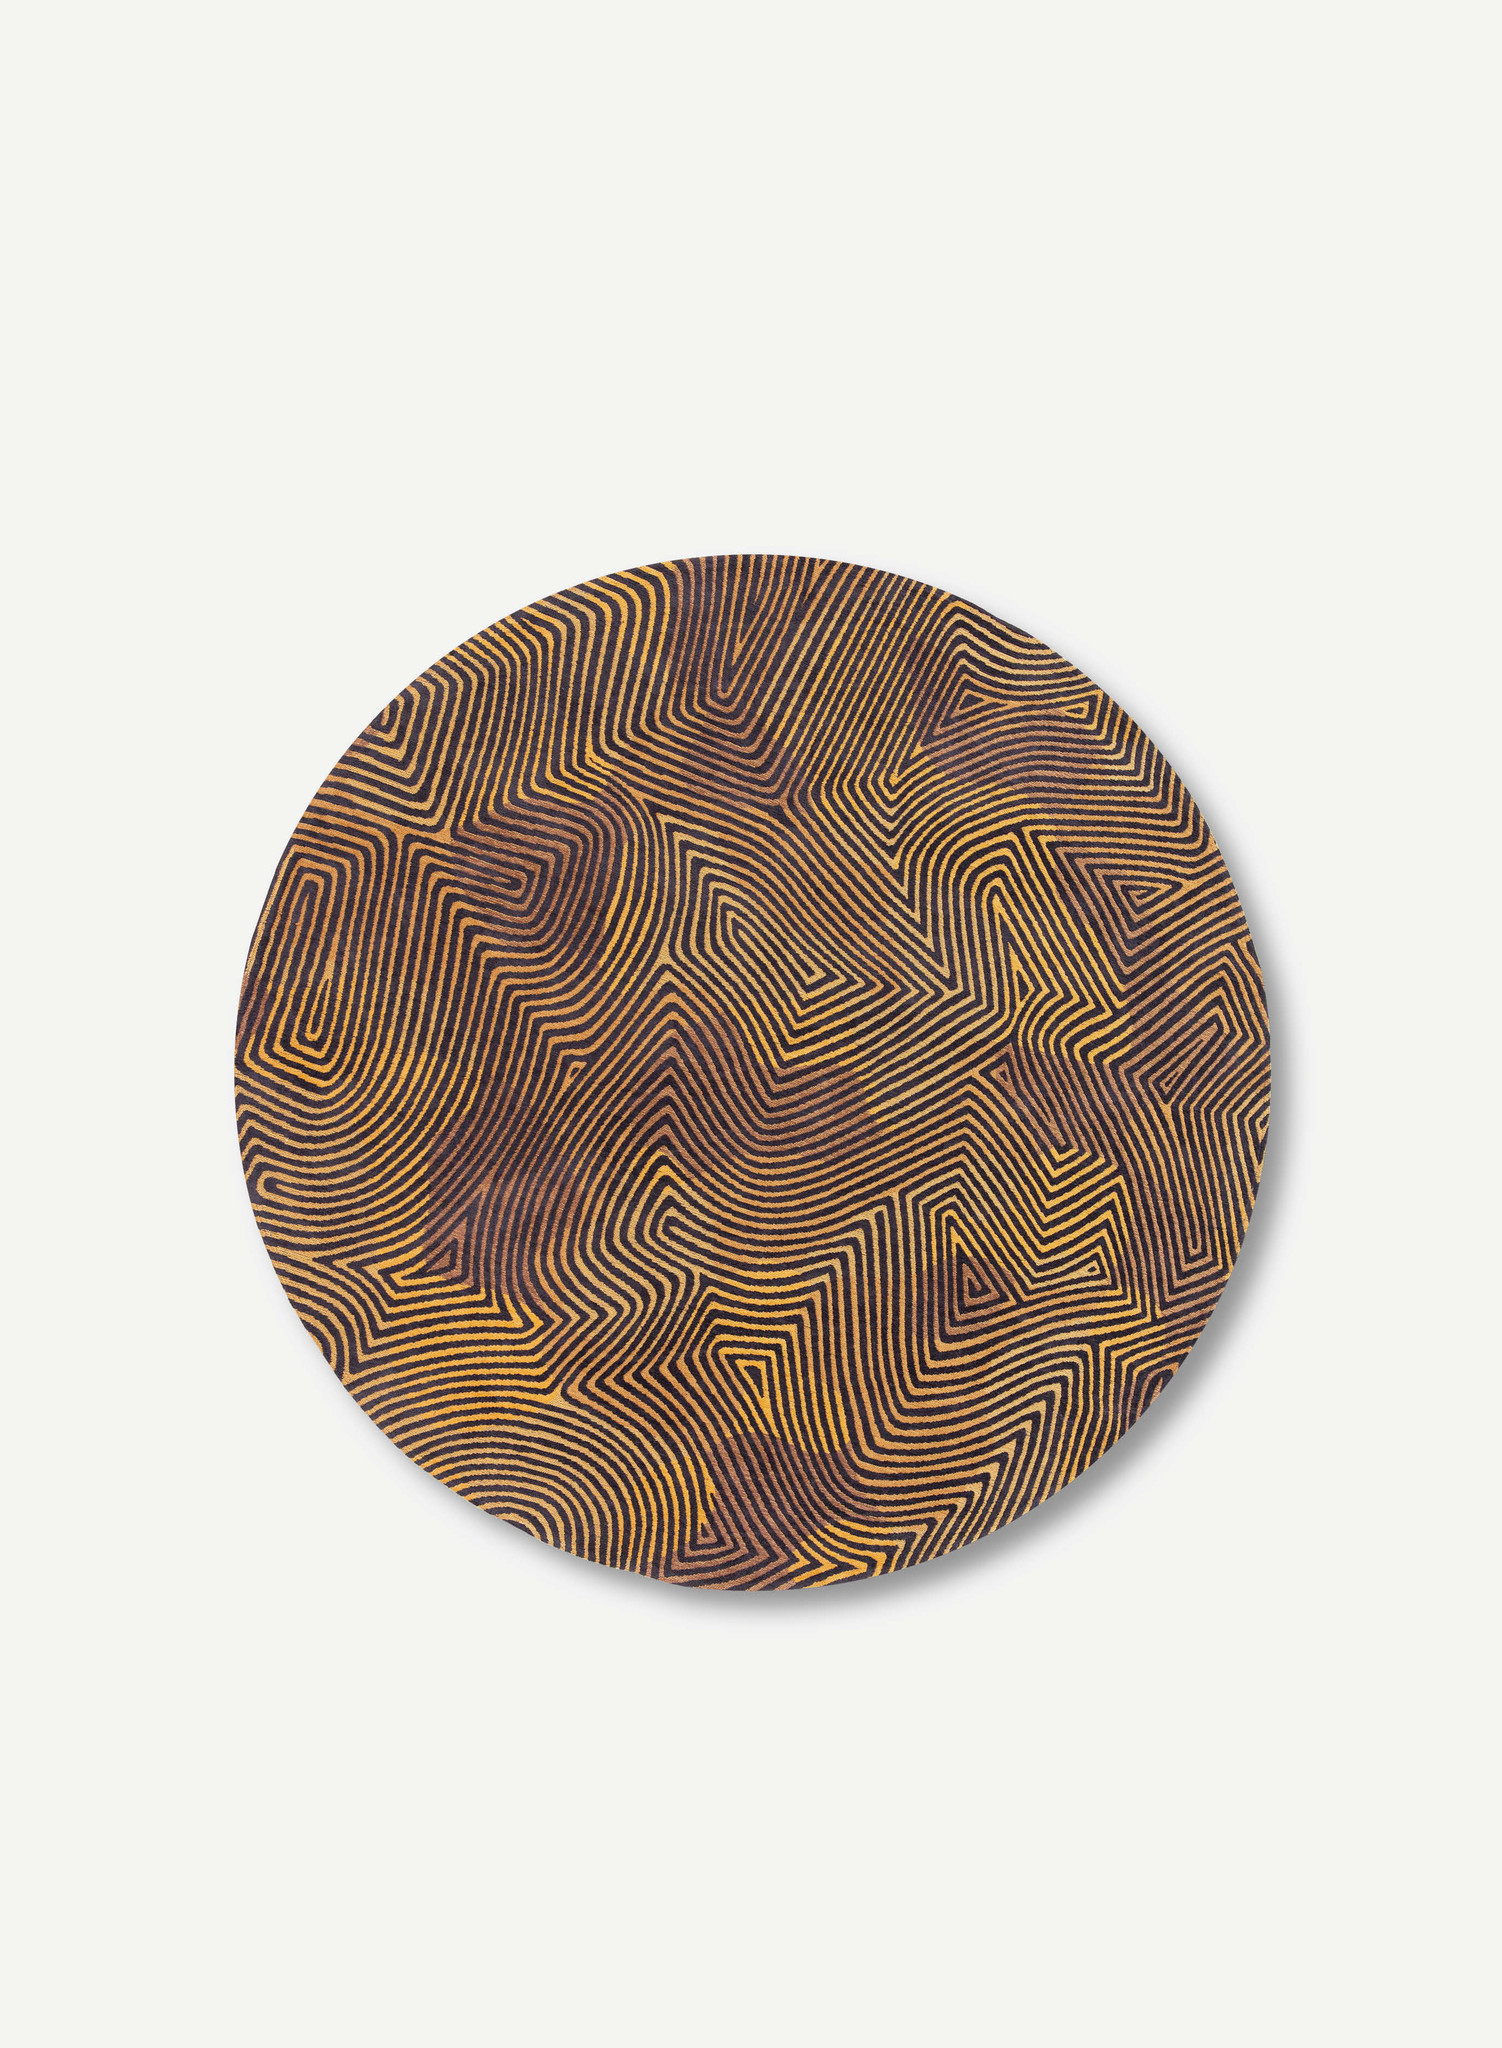 Black Gold Flatwoven Rug ☞ Size: 2' 7" x 8' 2" (80 x 250 cm)